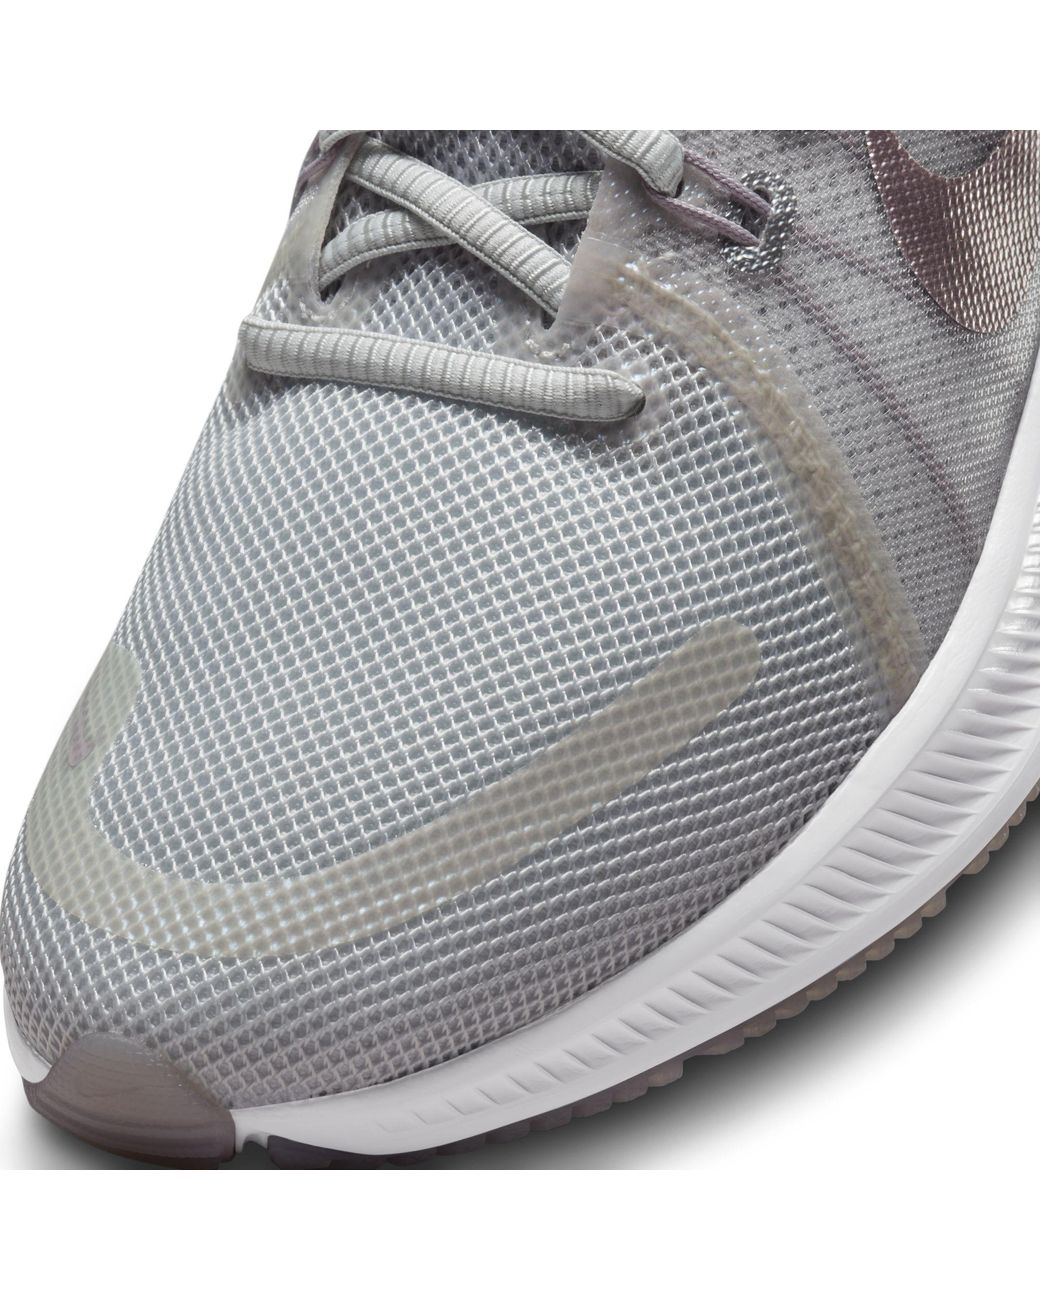 Nike Quest 4 Premium Road Running Shoes in Grey (Grey) | Lyst Australia